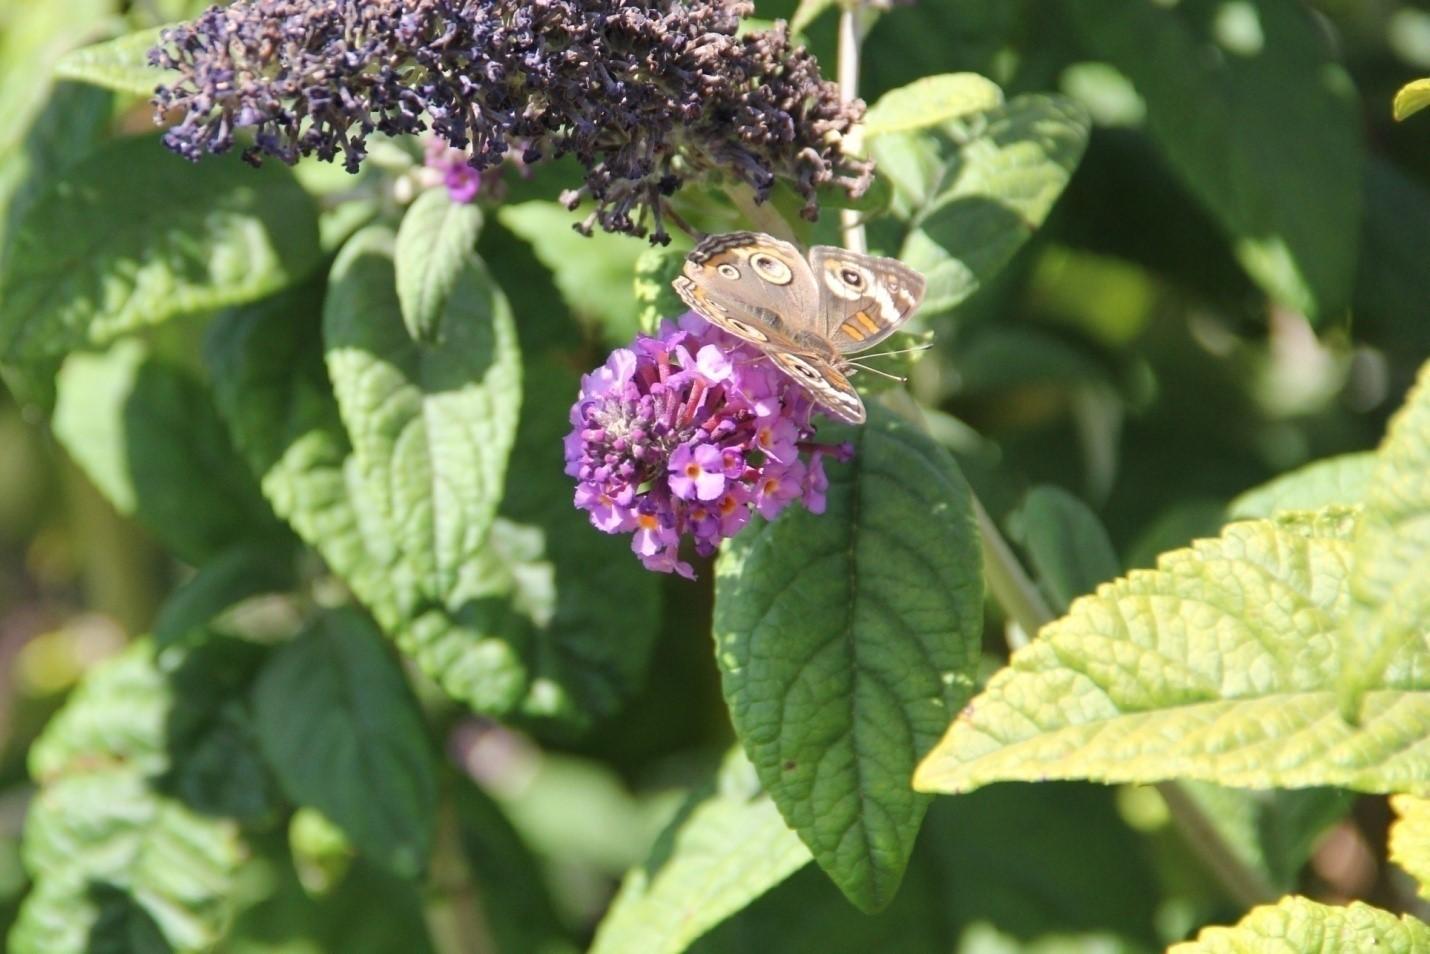 Buddleia ‘Purple Splendor’ close-up with Common Buckeye butterfly (Junonia coenia). Photo: SK Reid.